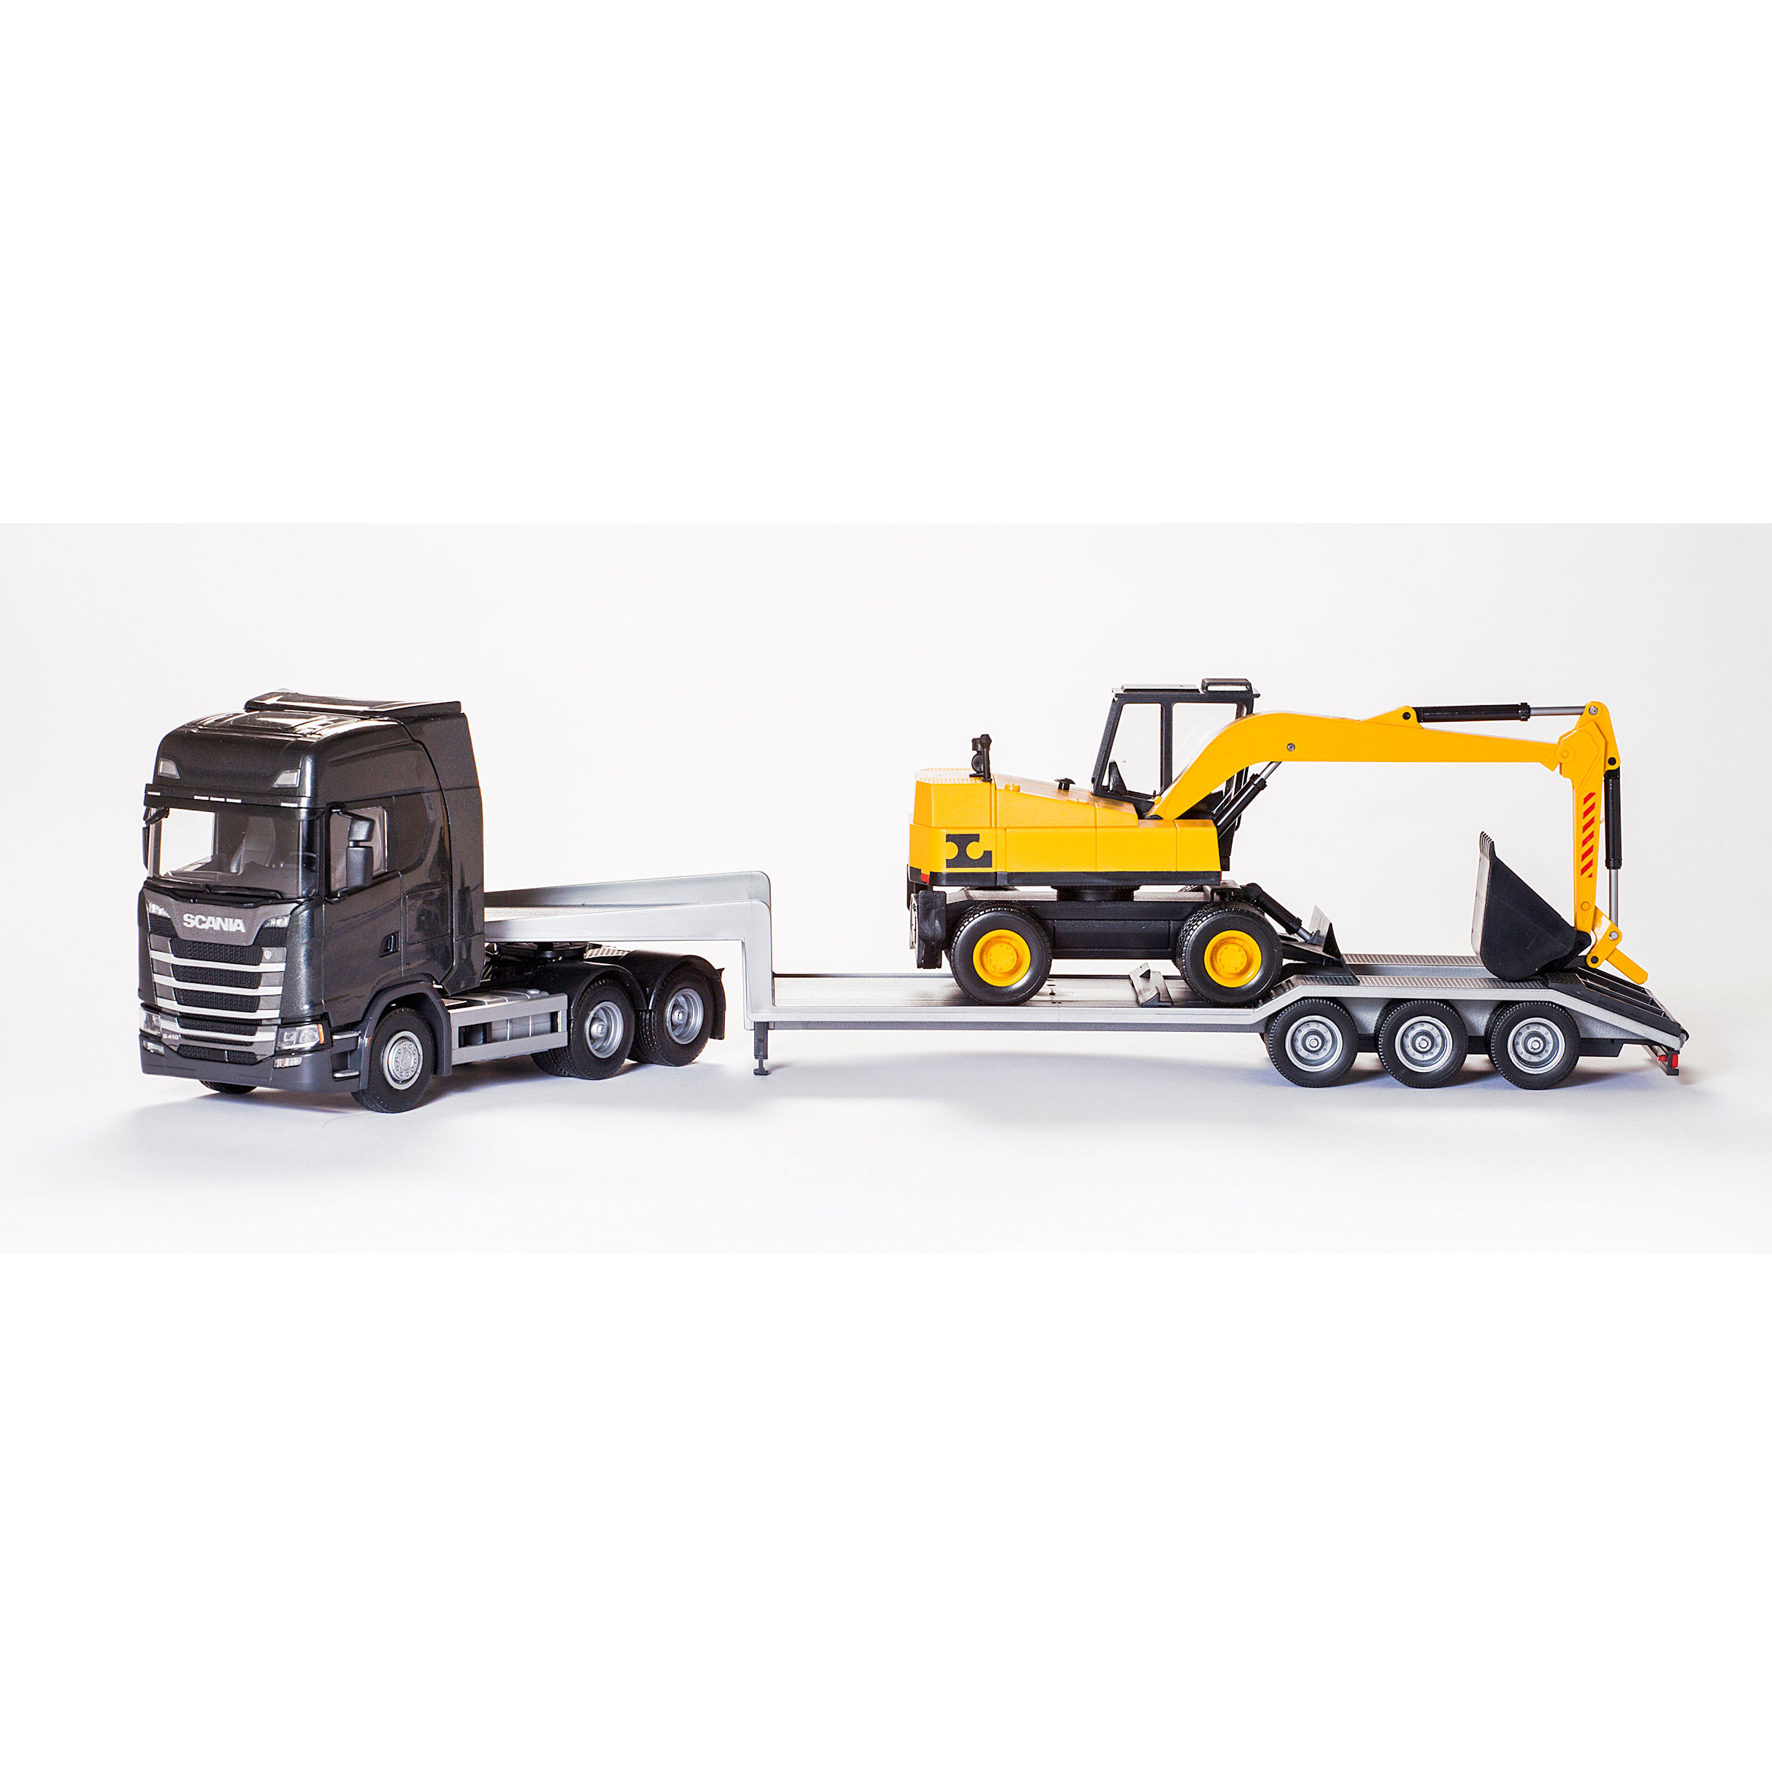 Toy trucks emek toy car truck with excavator scania s black low 1:25